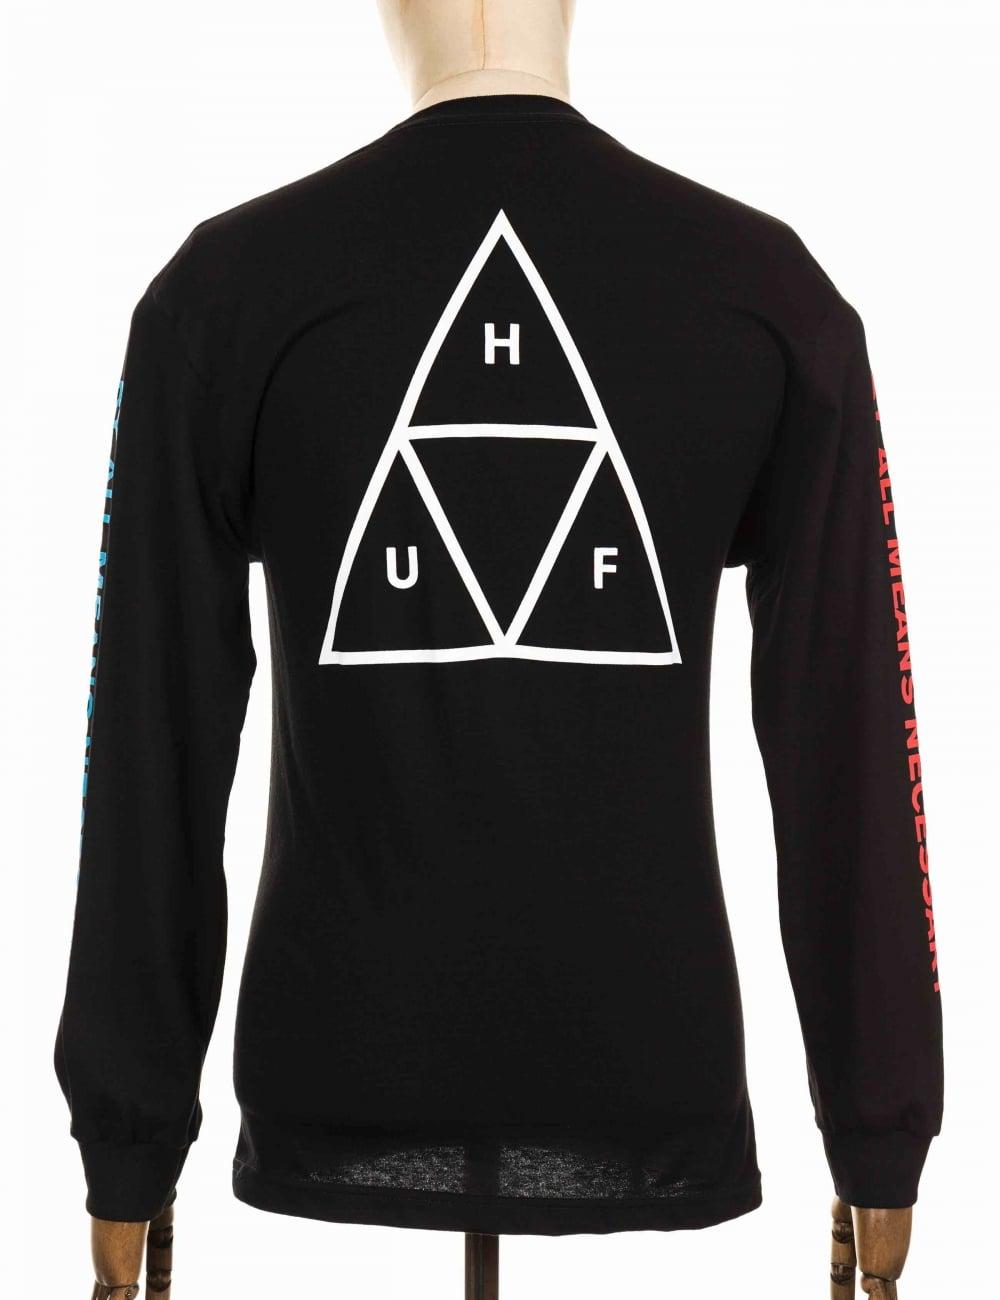 C Triangle T Logo - Huf L/S Multi Triple Triangle T-shirt - Black - Huf from iConsume UK